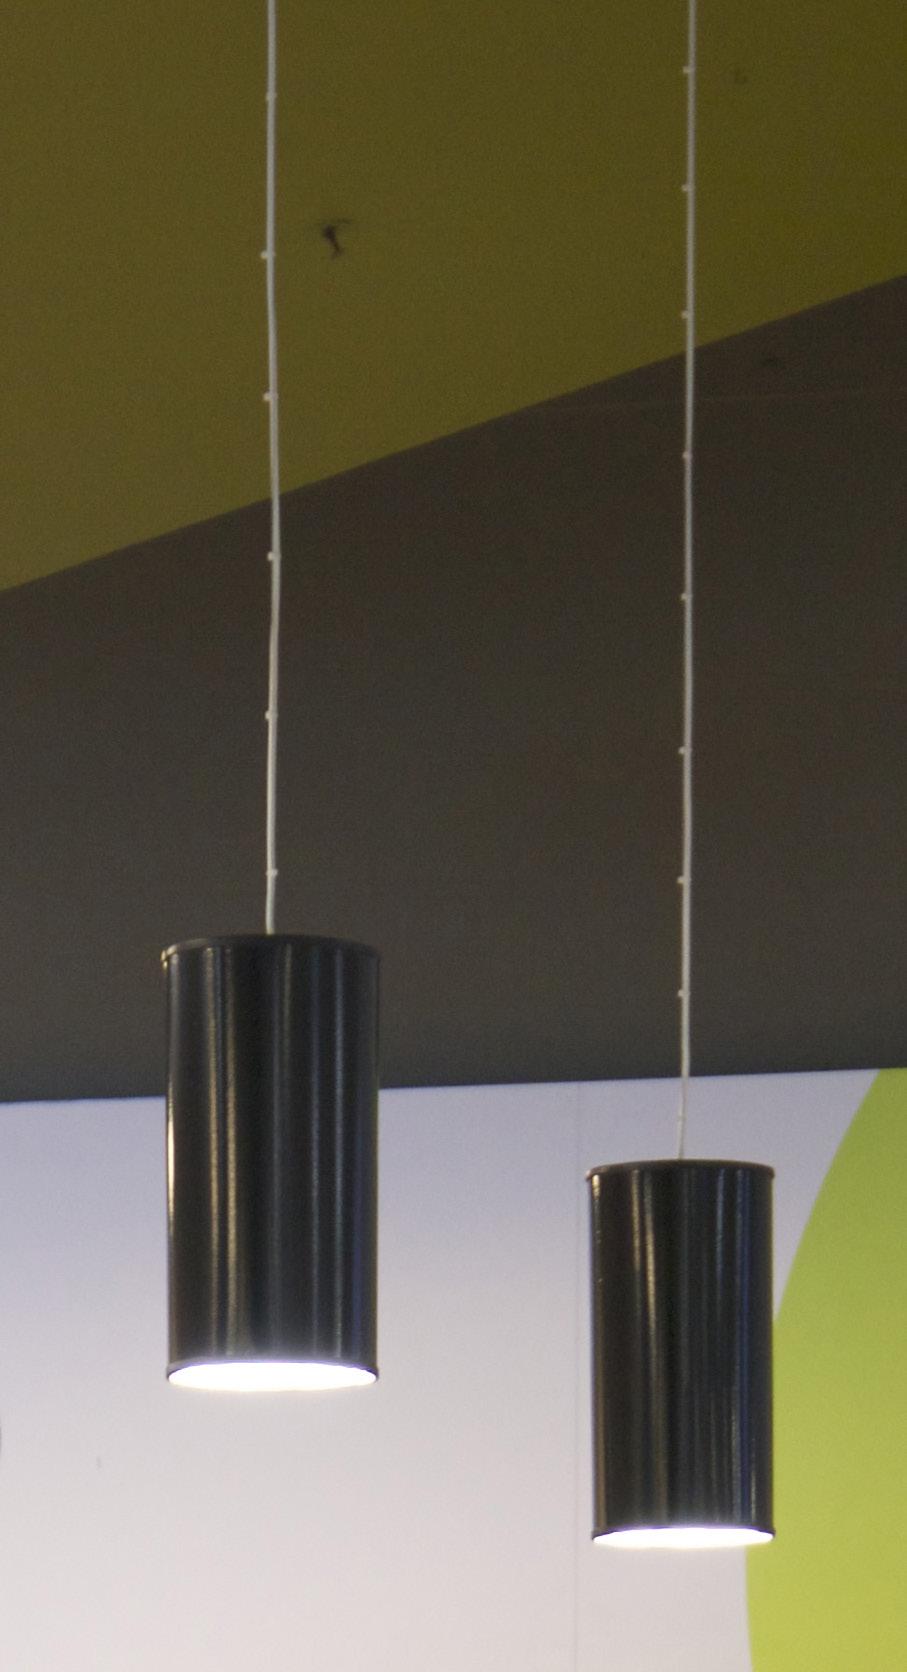 Top ring in black rubber or chrome M1 / 40W 450 Ø250 Material de suspensión: cable de acero de 4m incluído Material of suspension: 4m steel cable included Material del difusor: aluminio Diffuser